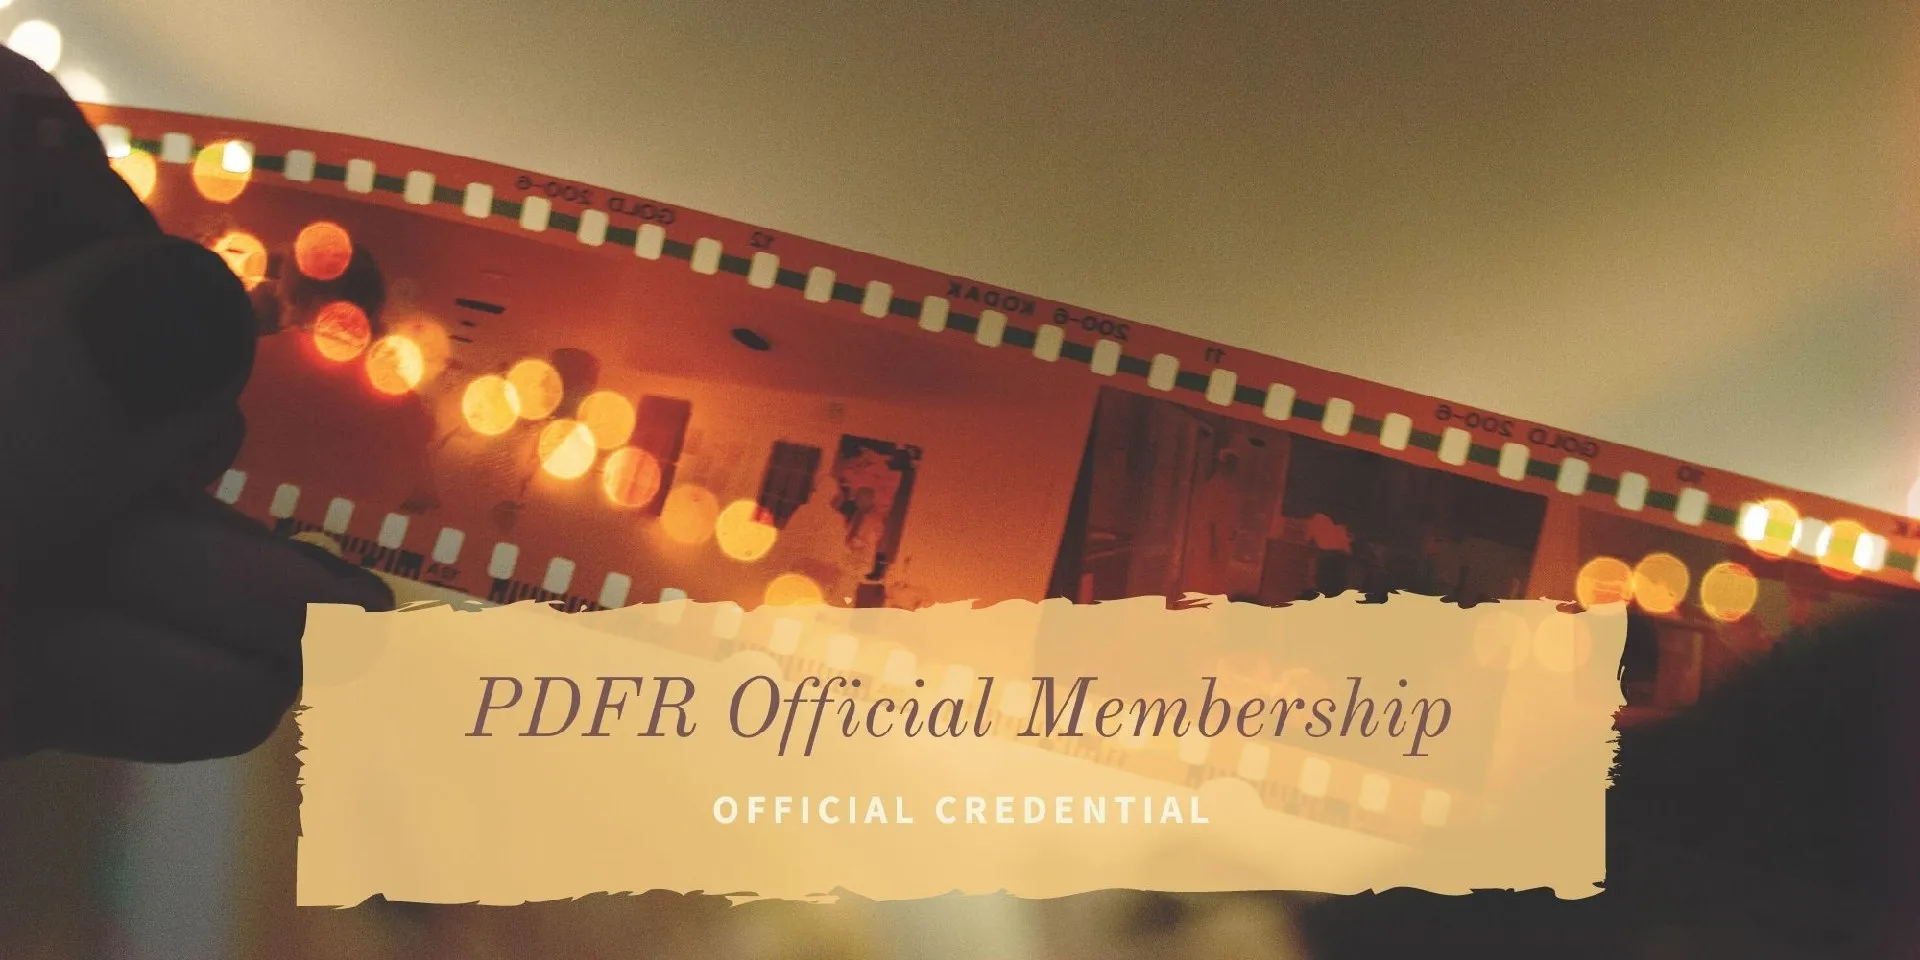 PDFR Official Membership